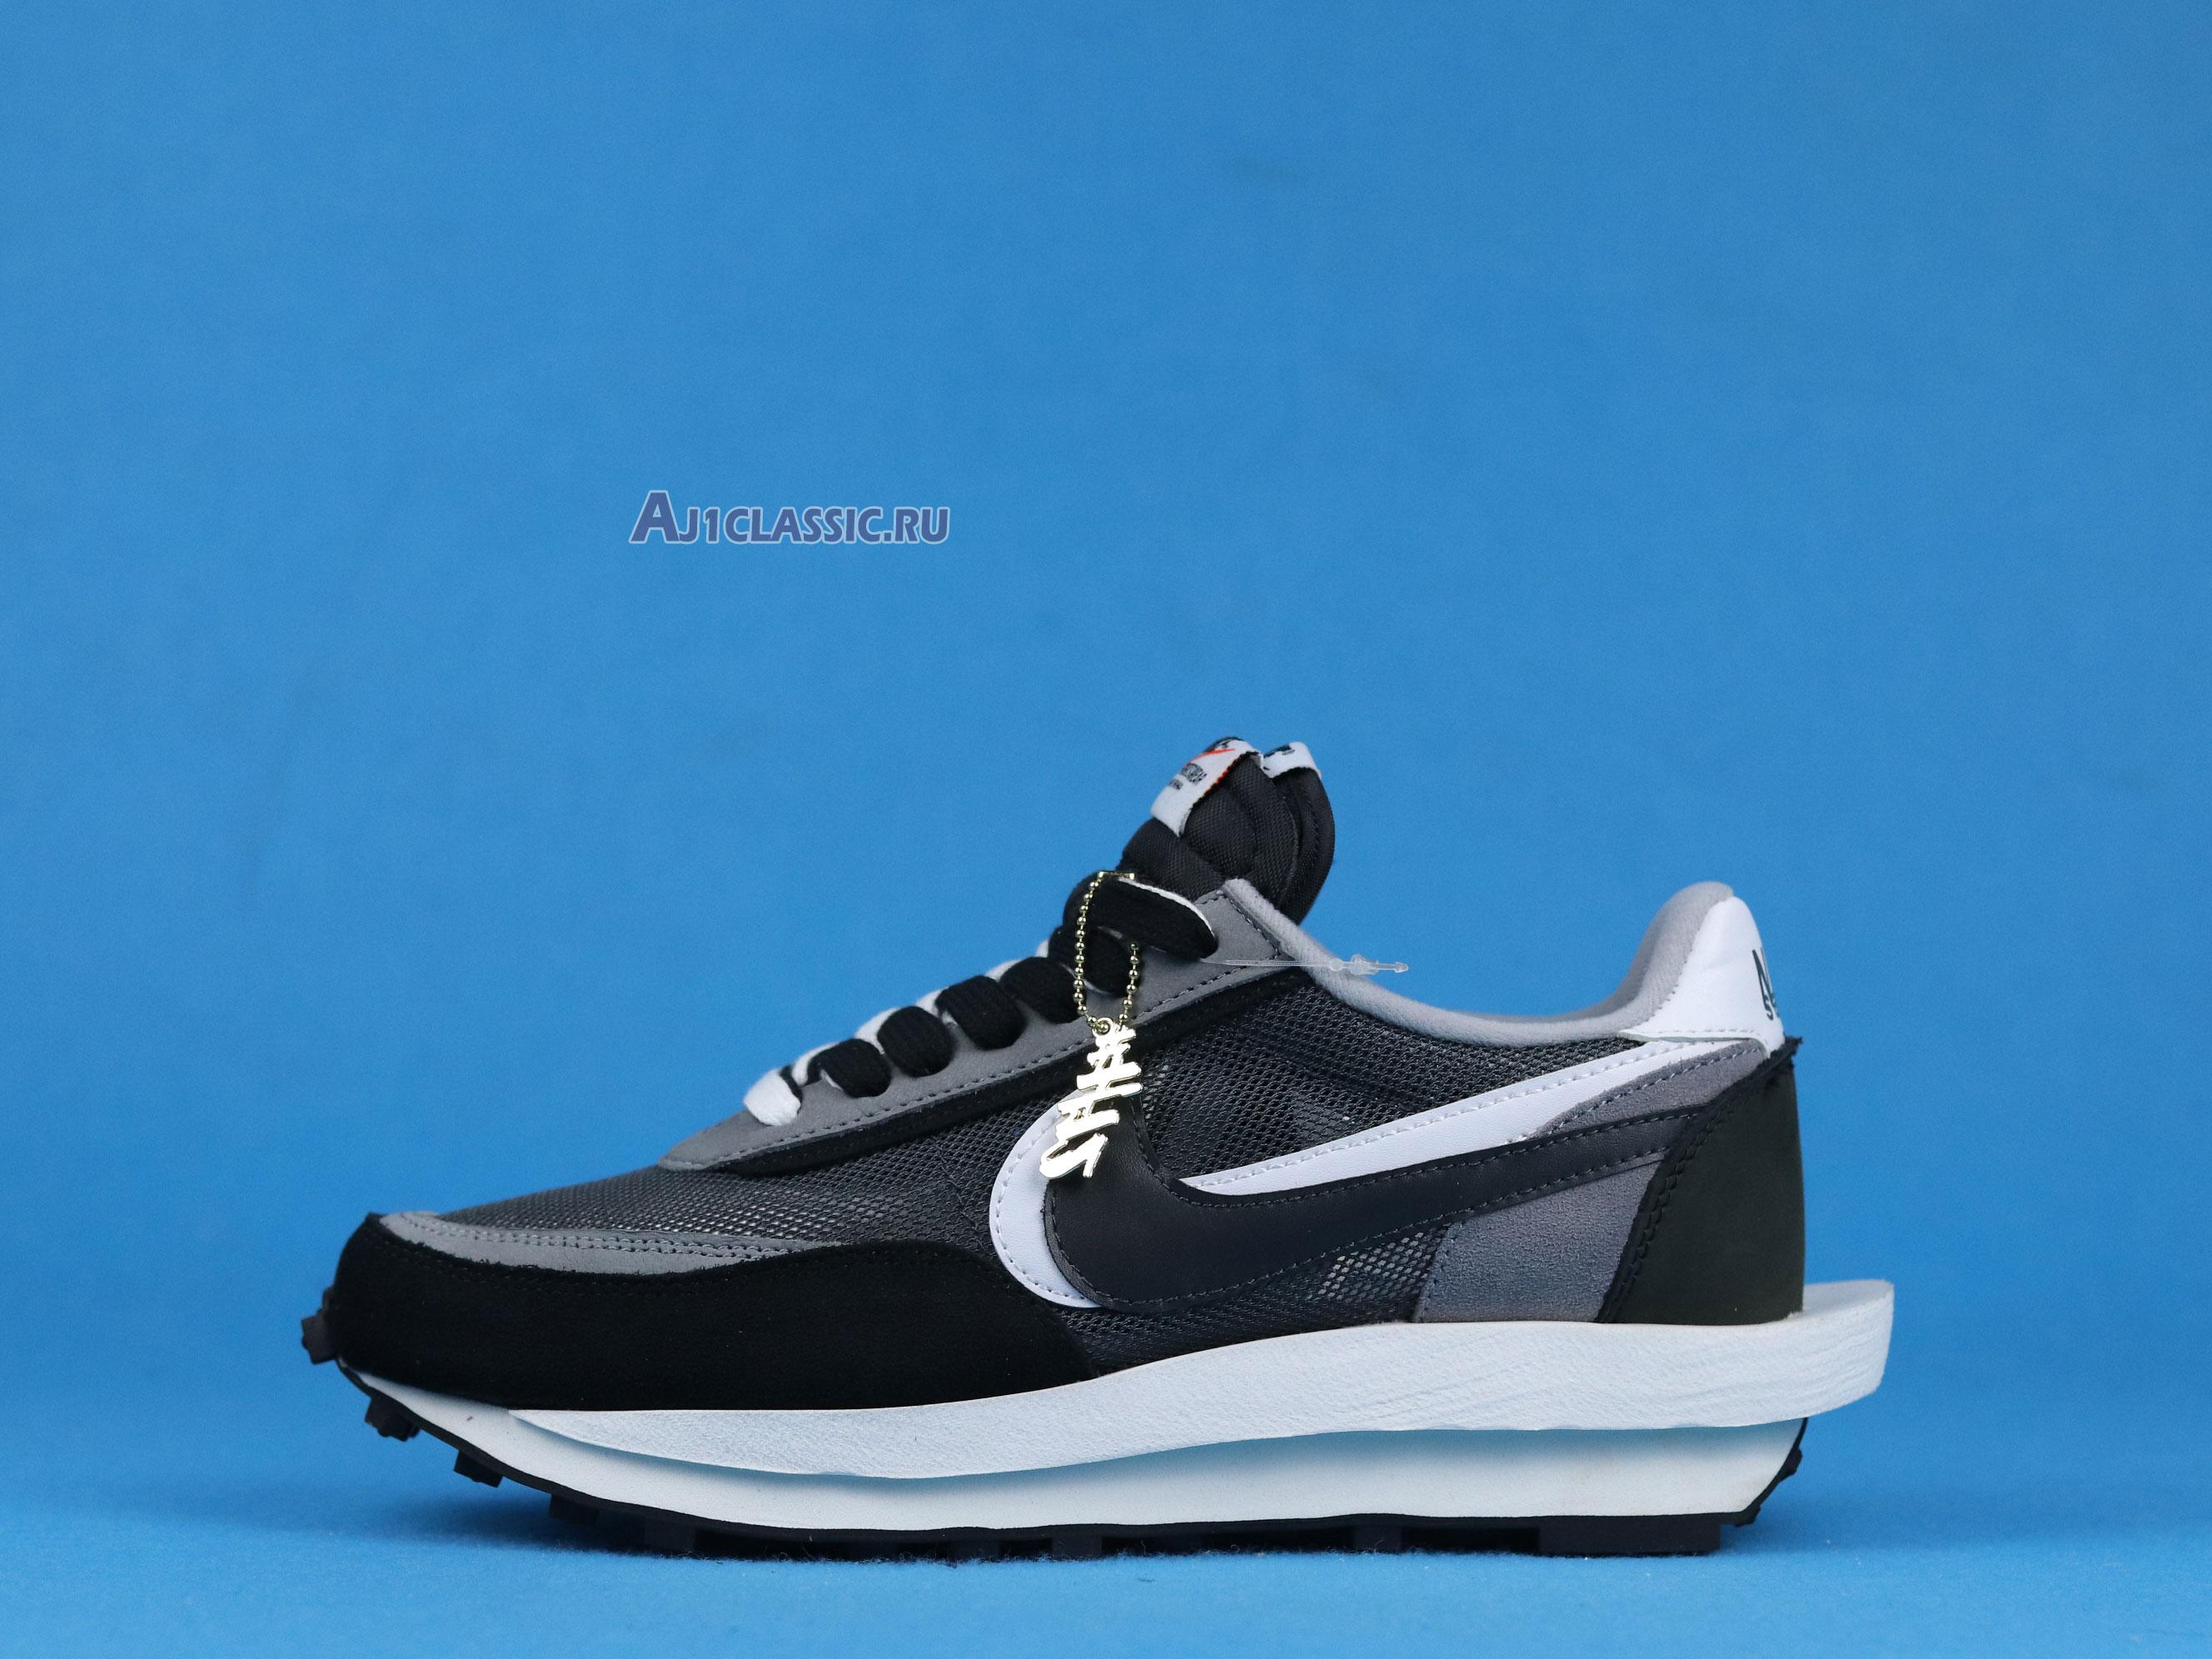 Sacai x Nike LDWaffle Black BV0073-001 Black/Anthracite-White-Gunsmoke Sneakers